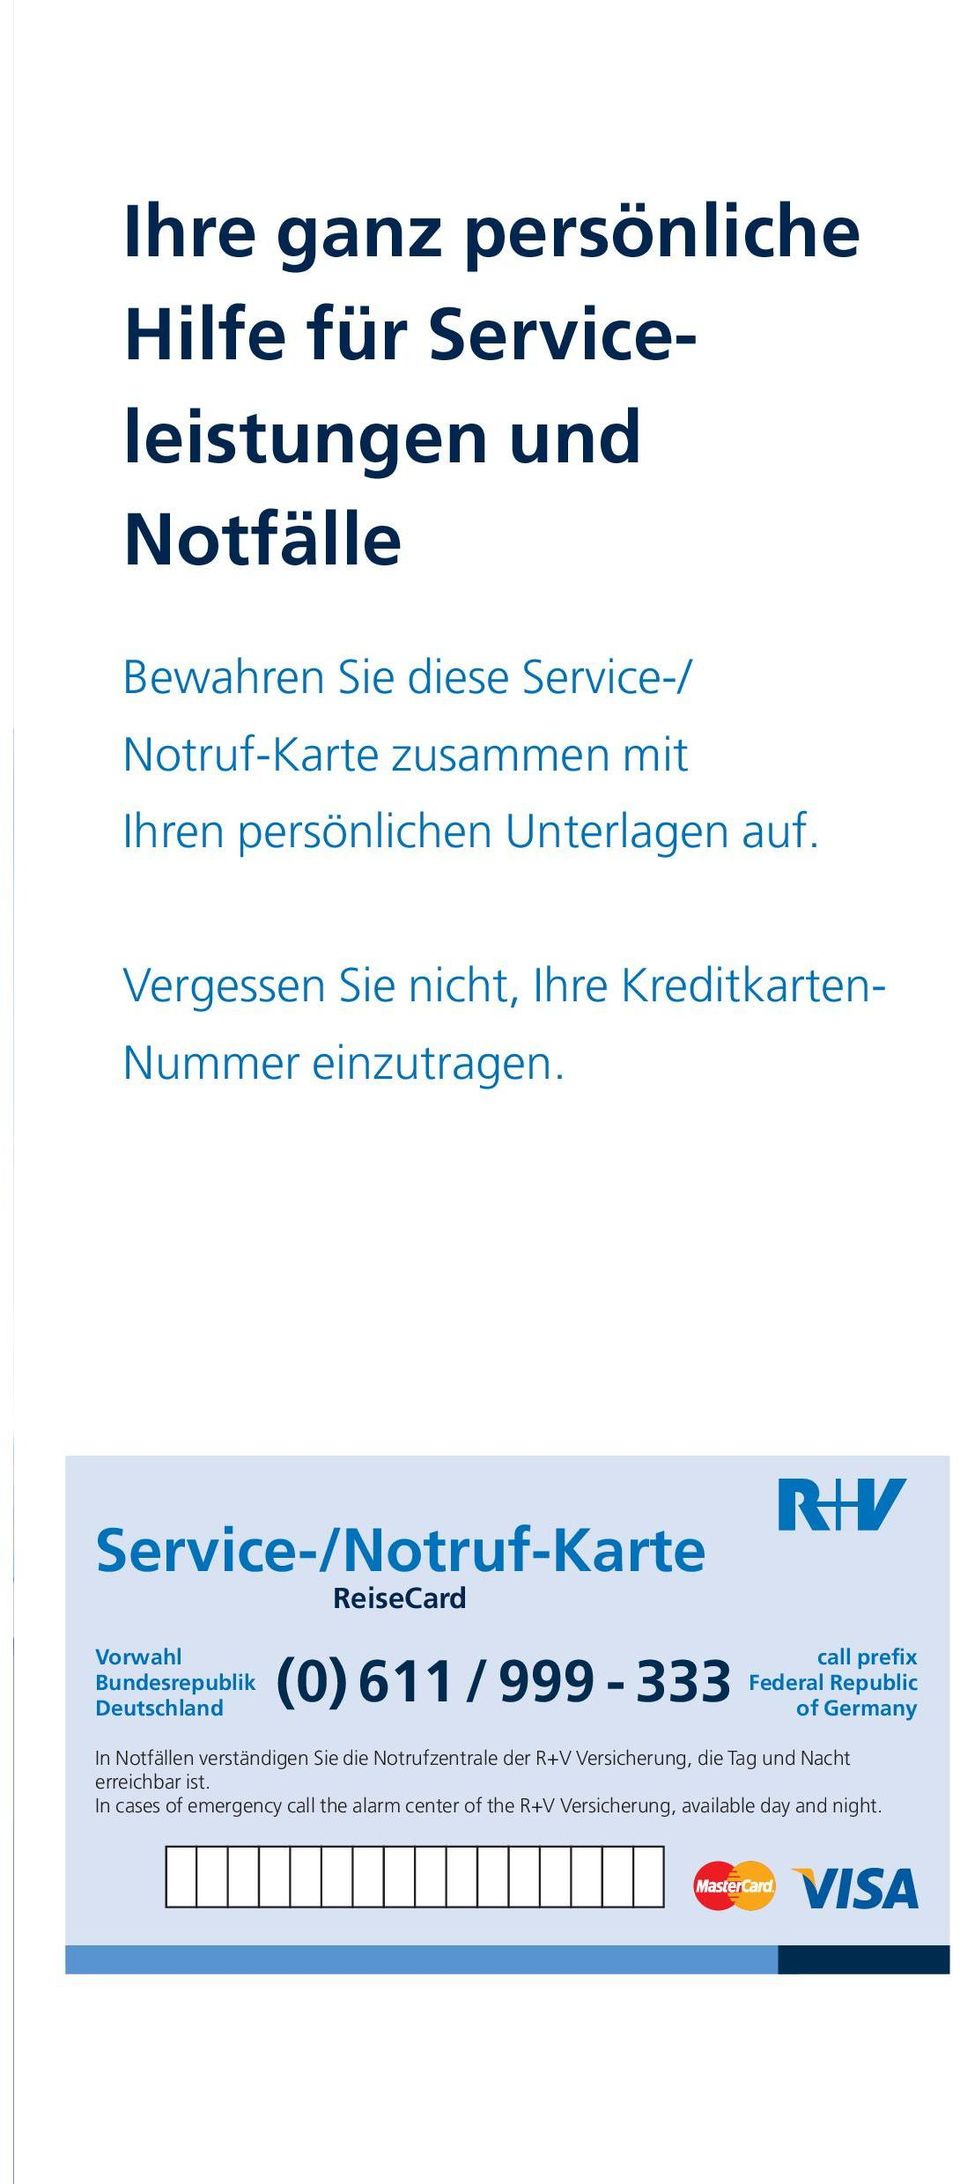 Service-/Notruf-Karte ReiseCard Vorwahl Bundesrepublik (0) 611 / 999-333 Deutschland call prefix Federal Republic of Germany In